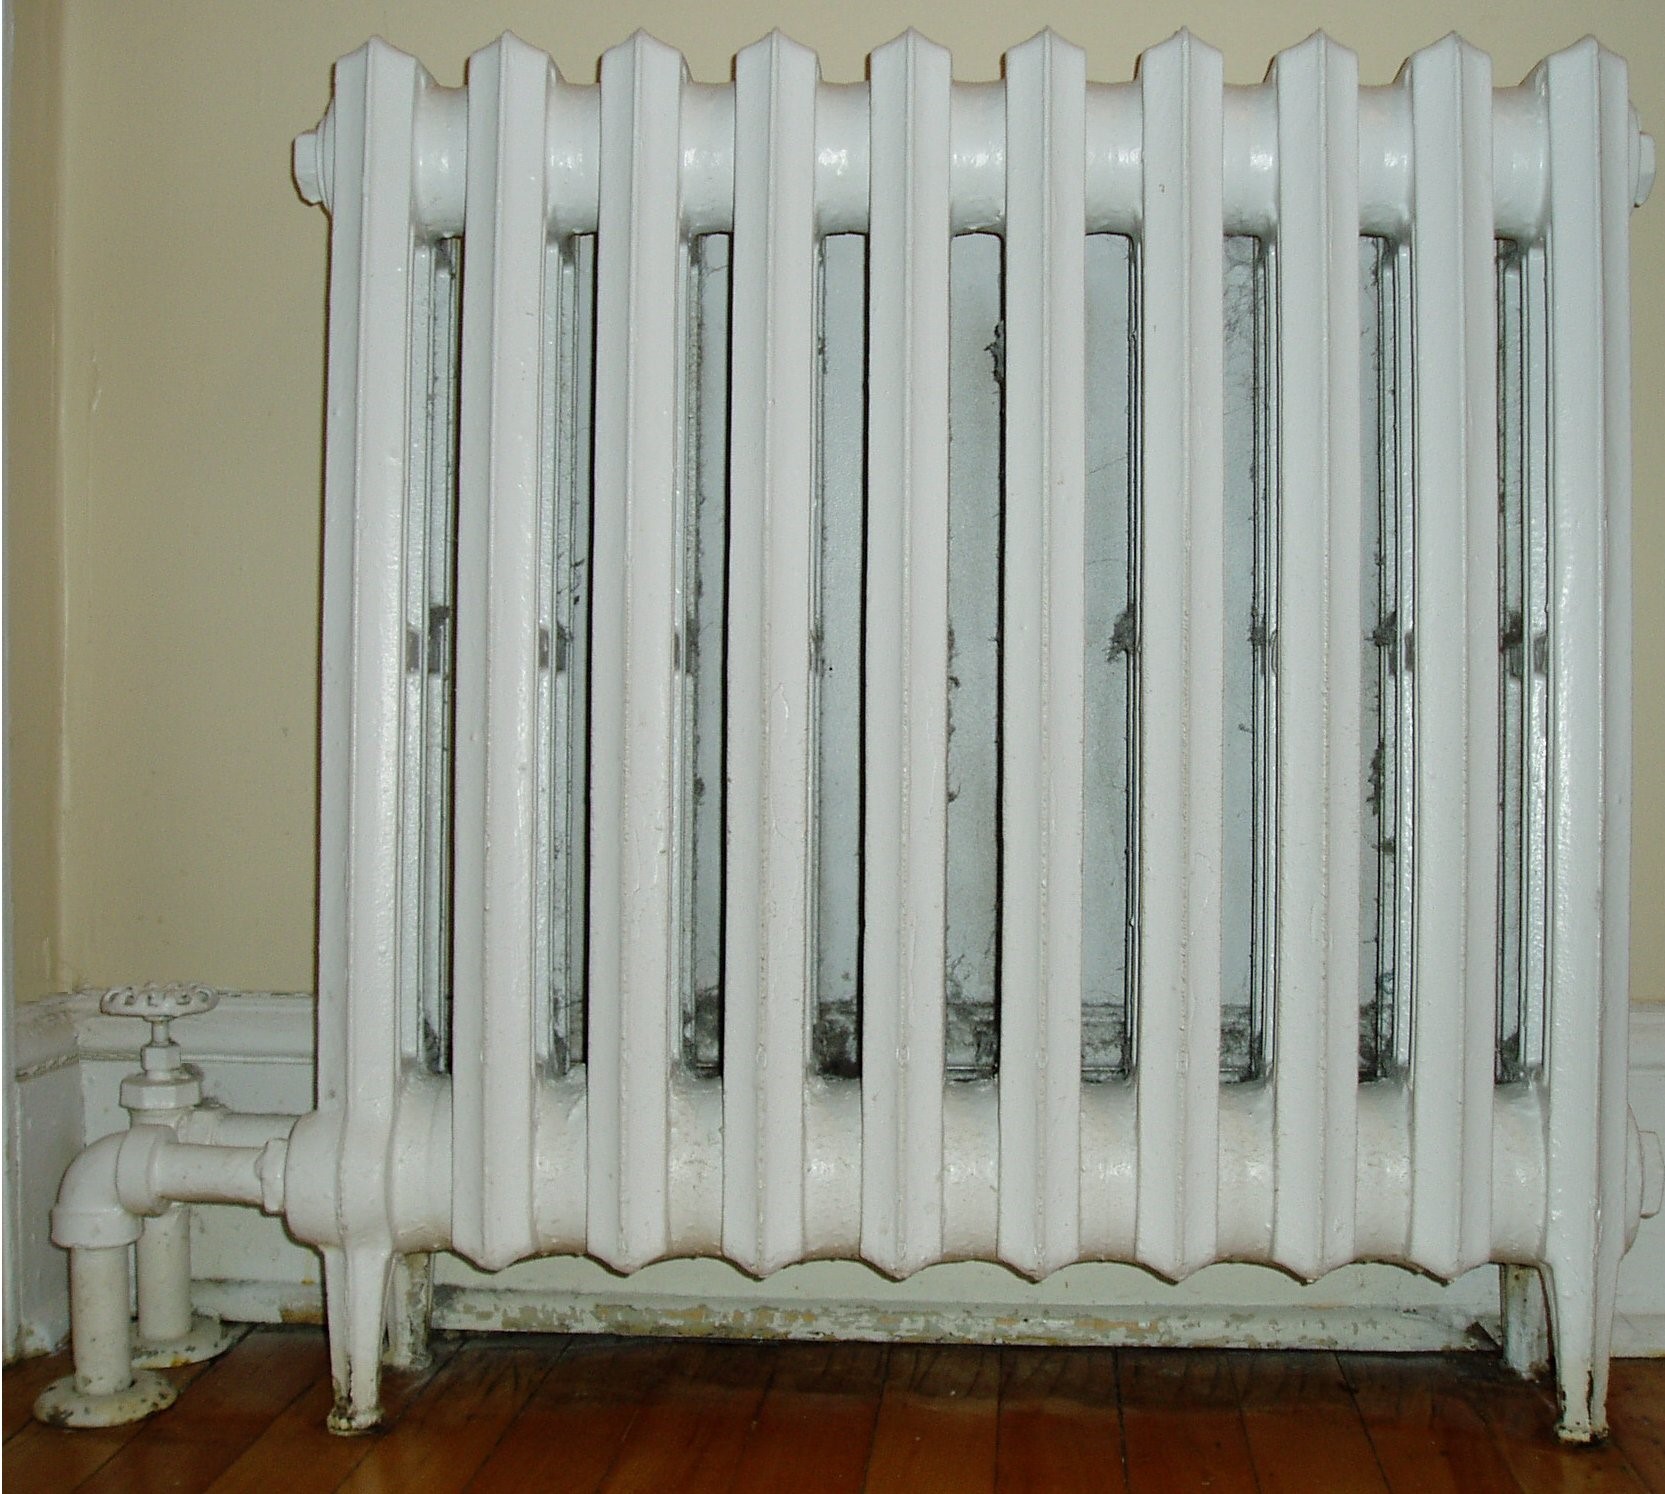 replacing a radiator at home